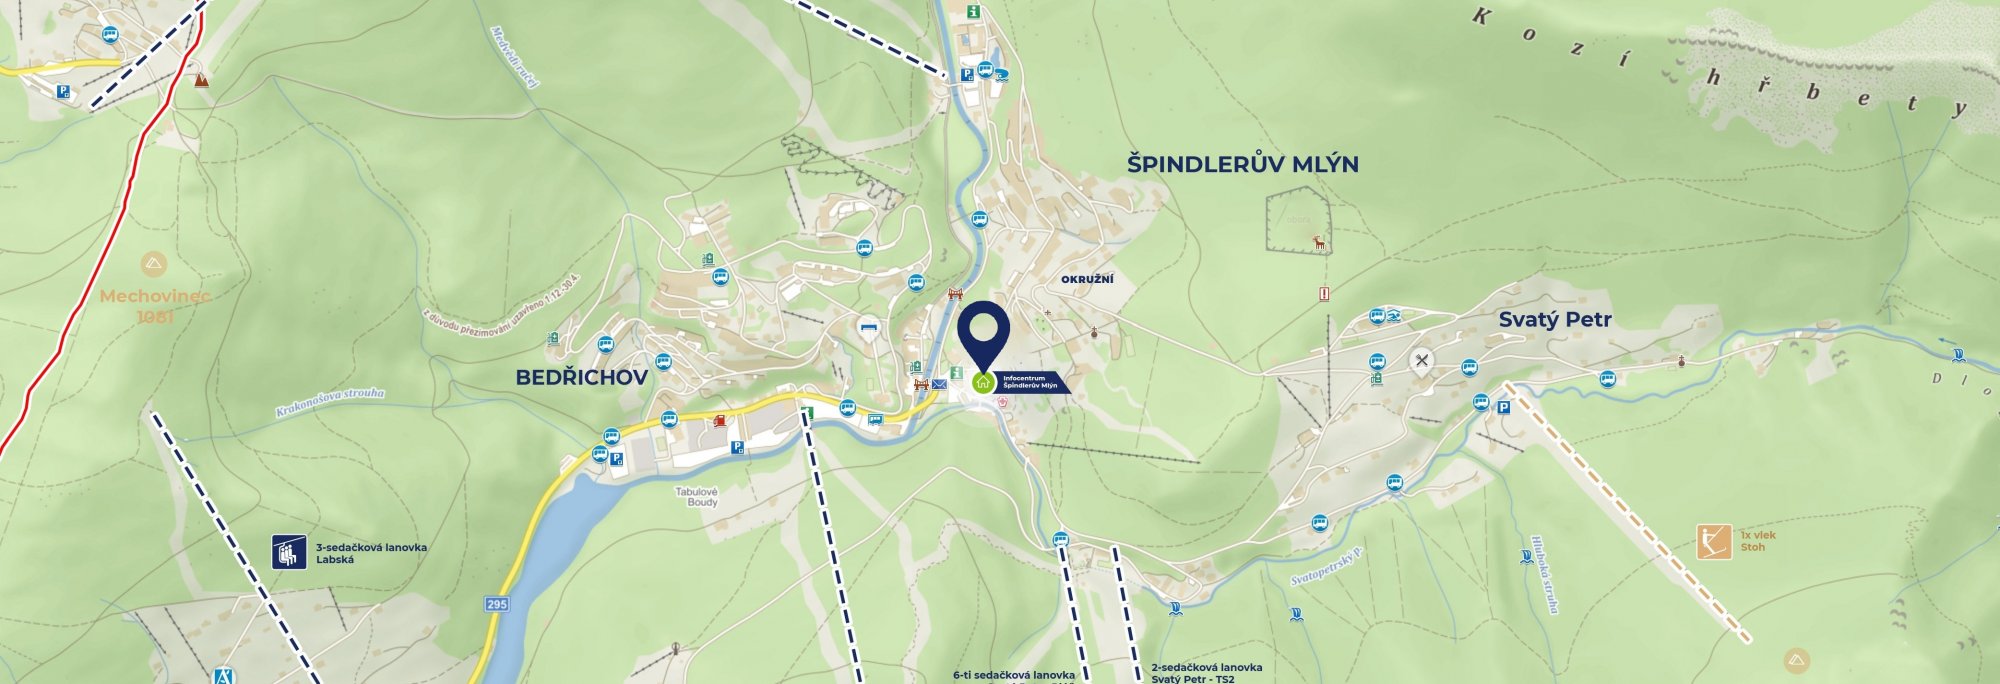 Mapa Špindlerův mlýn